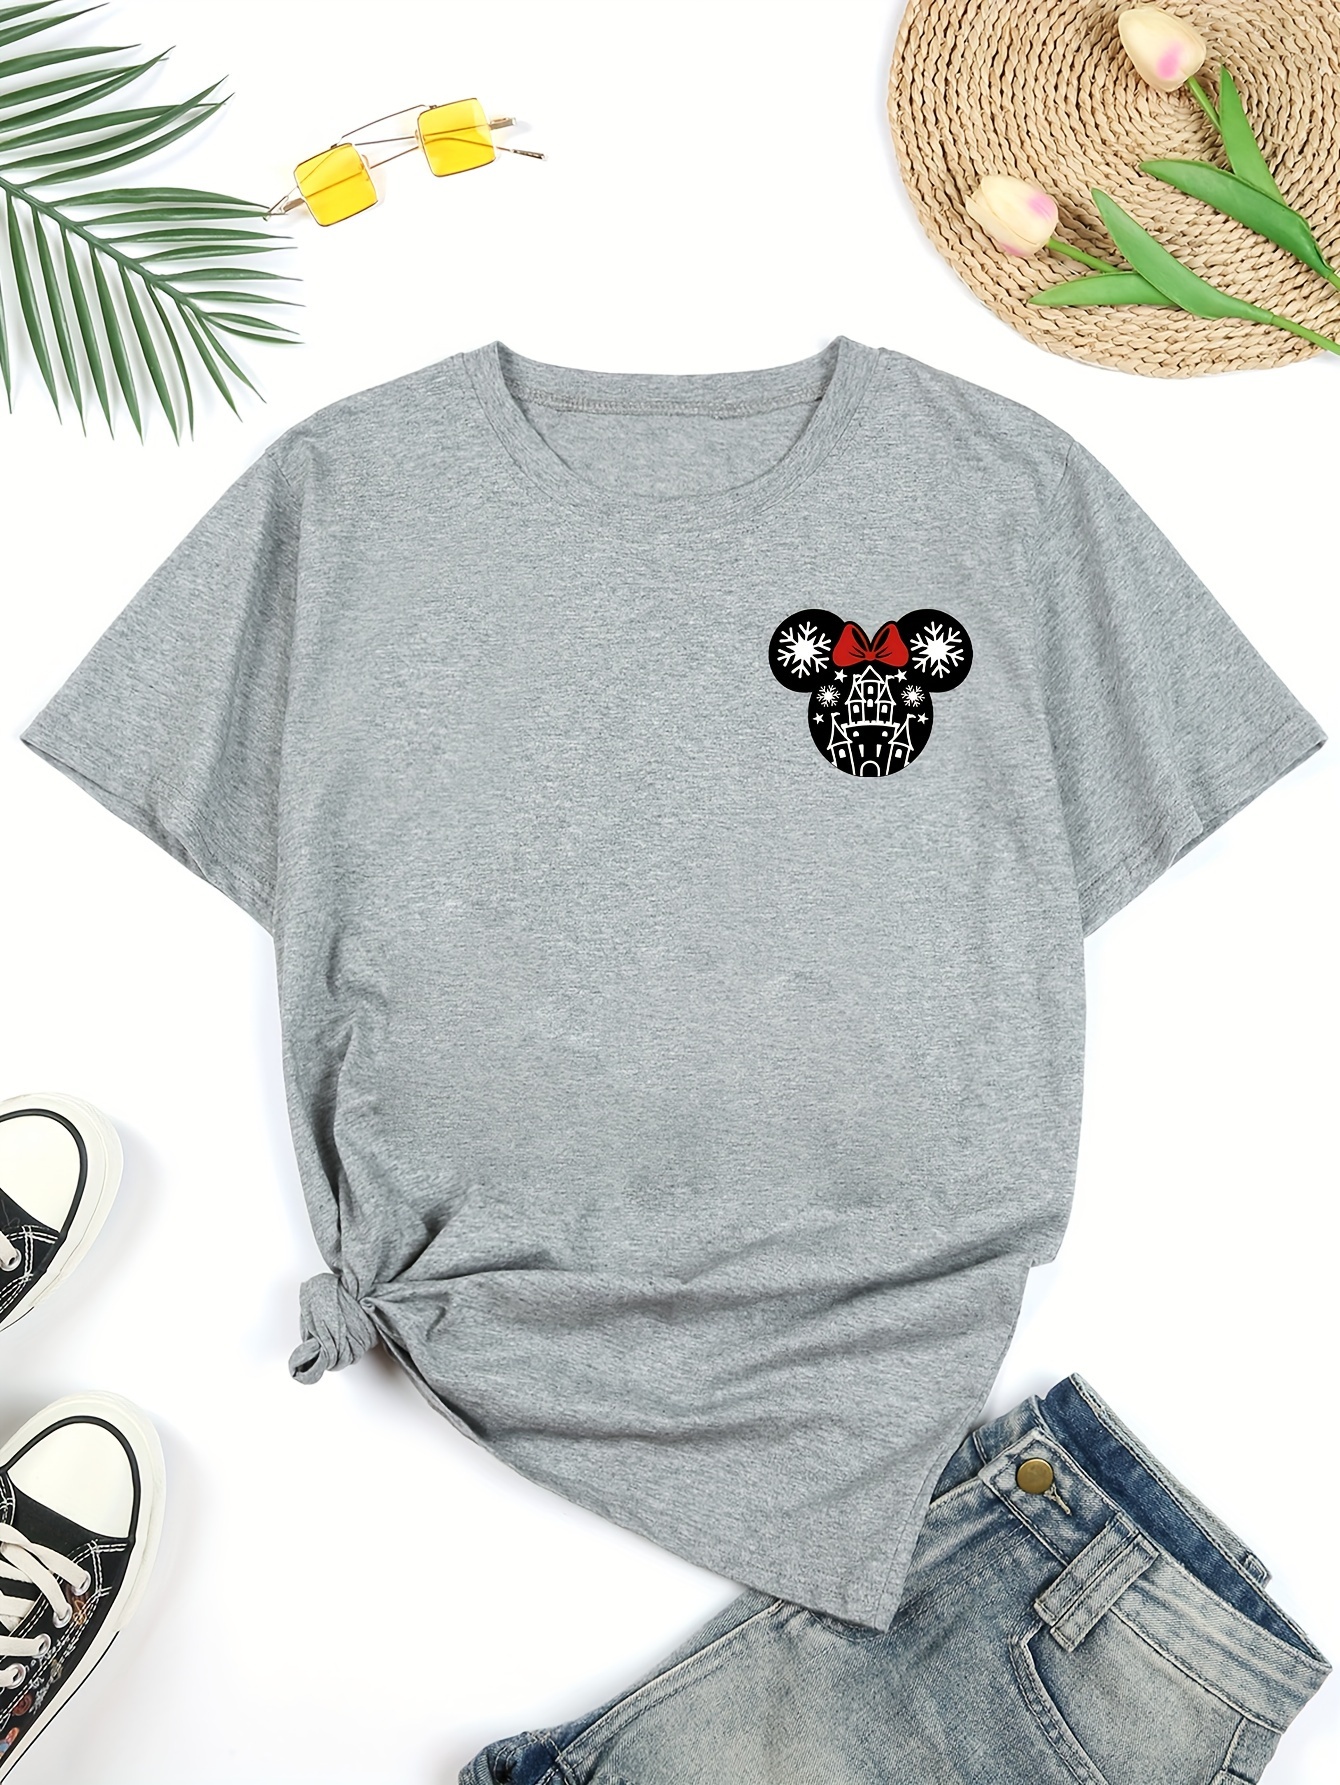 Disney Minnie Mouse Short Sleeve Jersey Shirt (Women's Plus